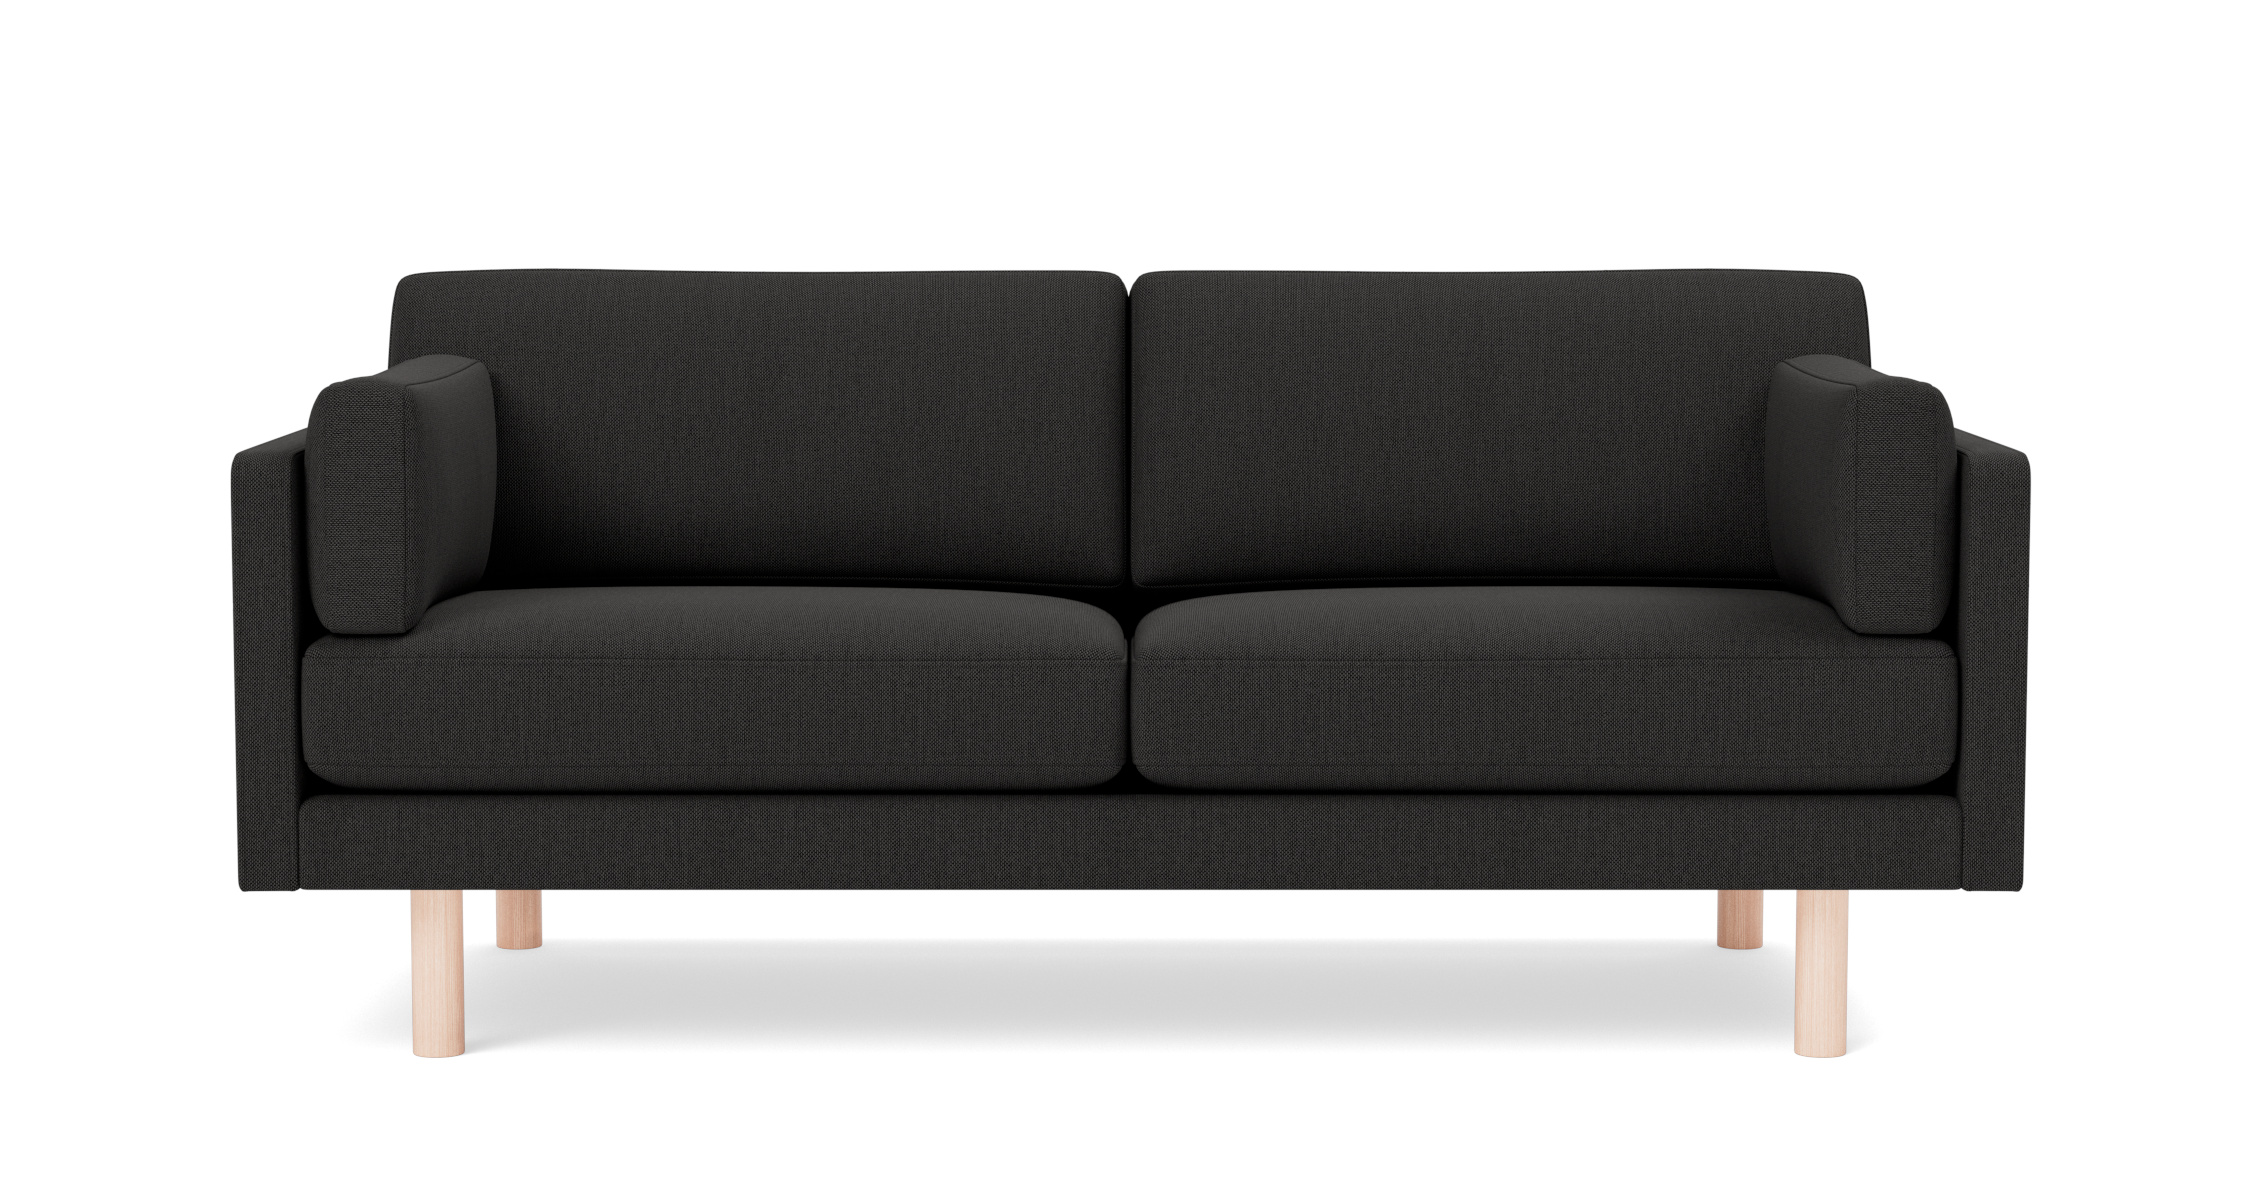 EJ220 Sofa 2-Sitzer, 86 cm, brushed chrom / leder max 95 cognac